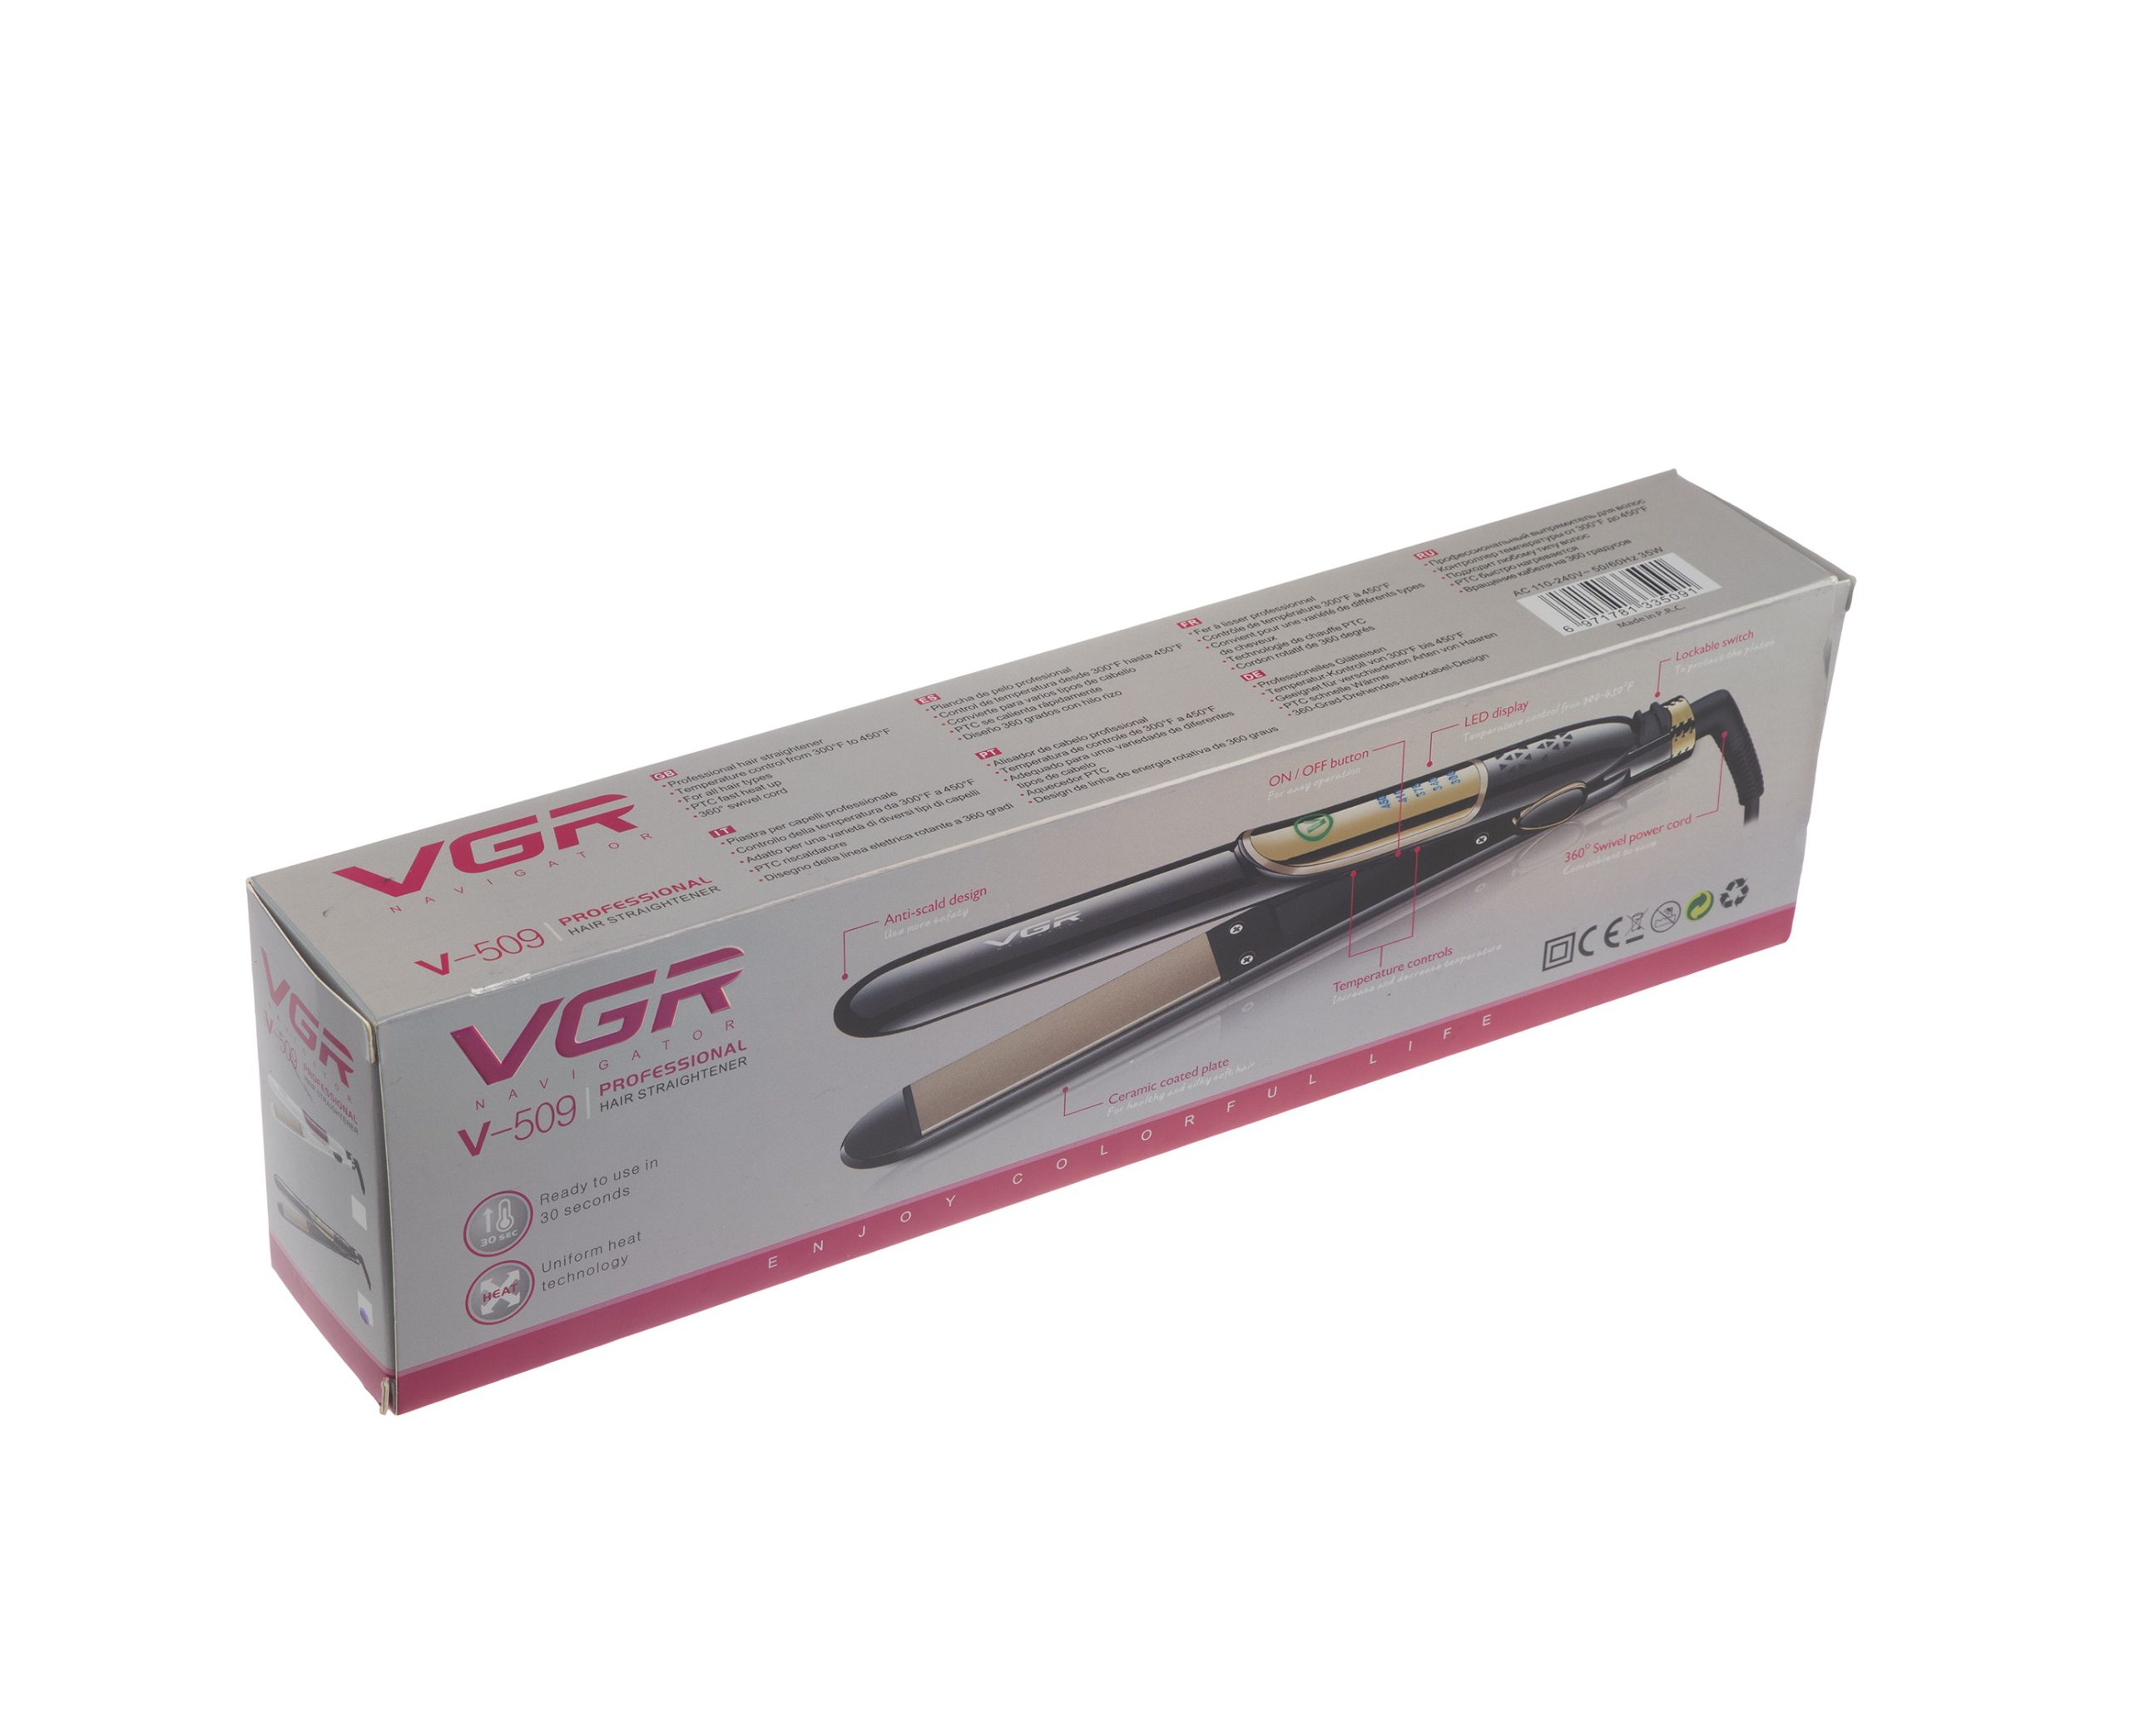 اتو مو کراتینه وی جی ار VGR Hair straightener مدل V-509